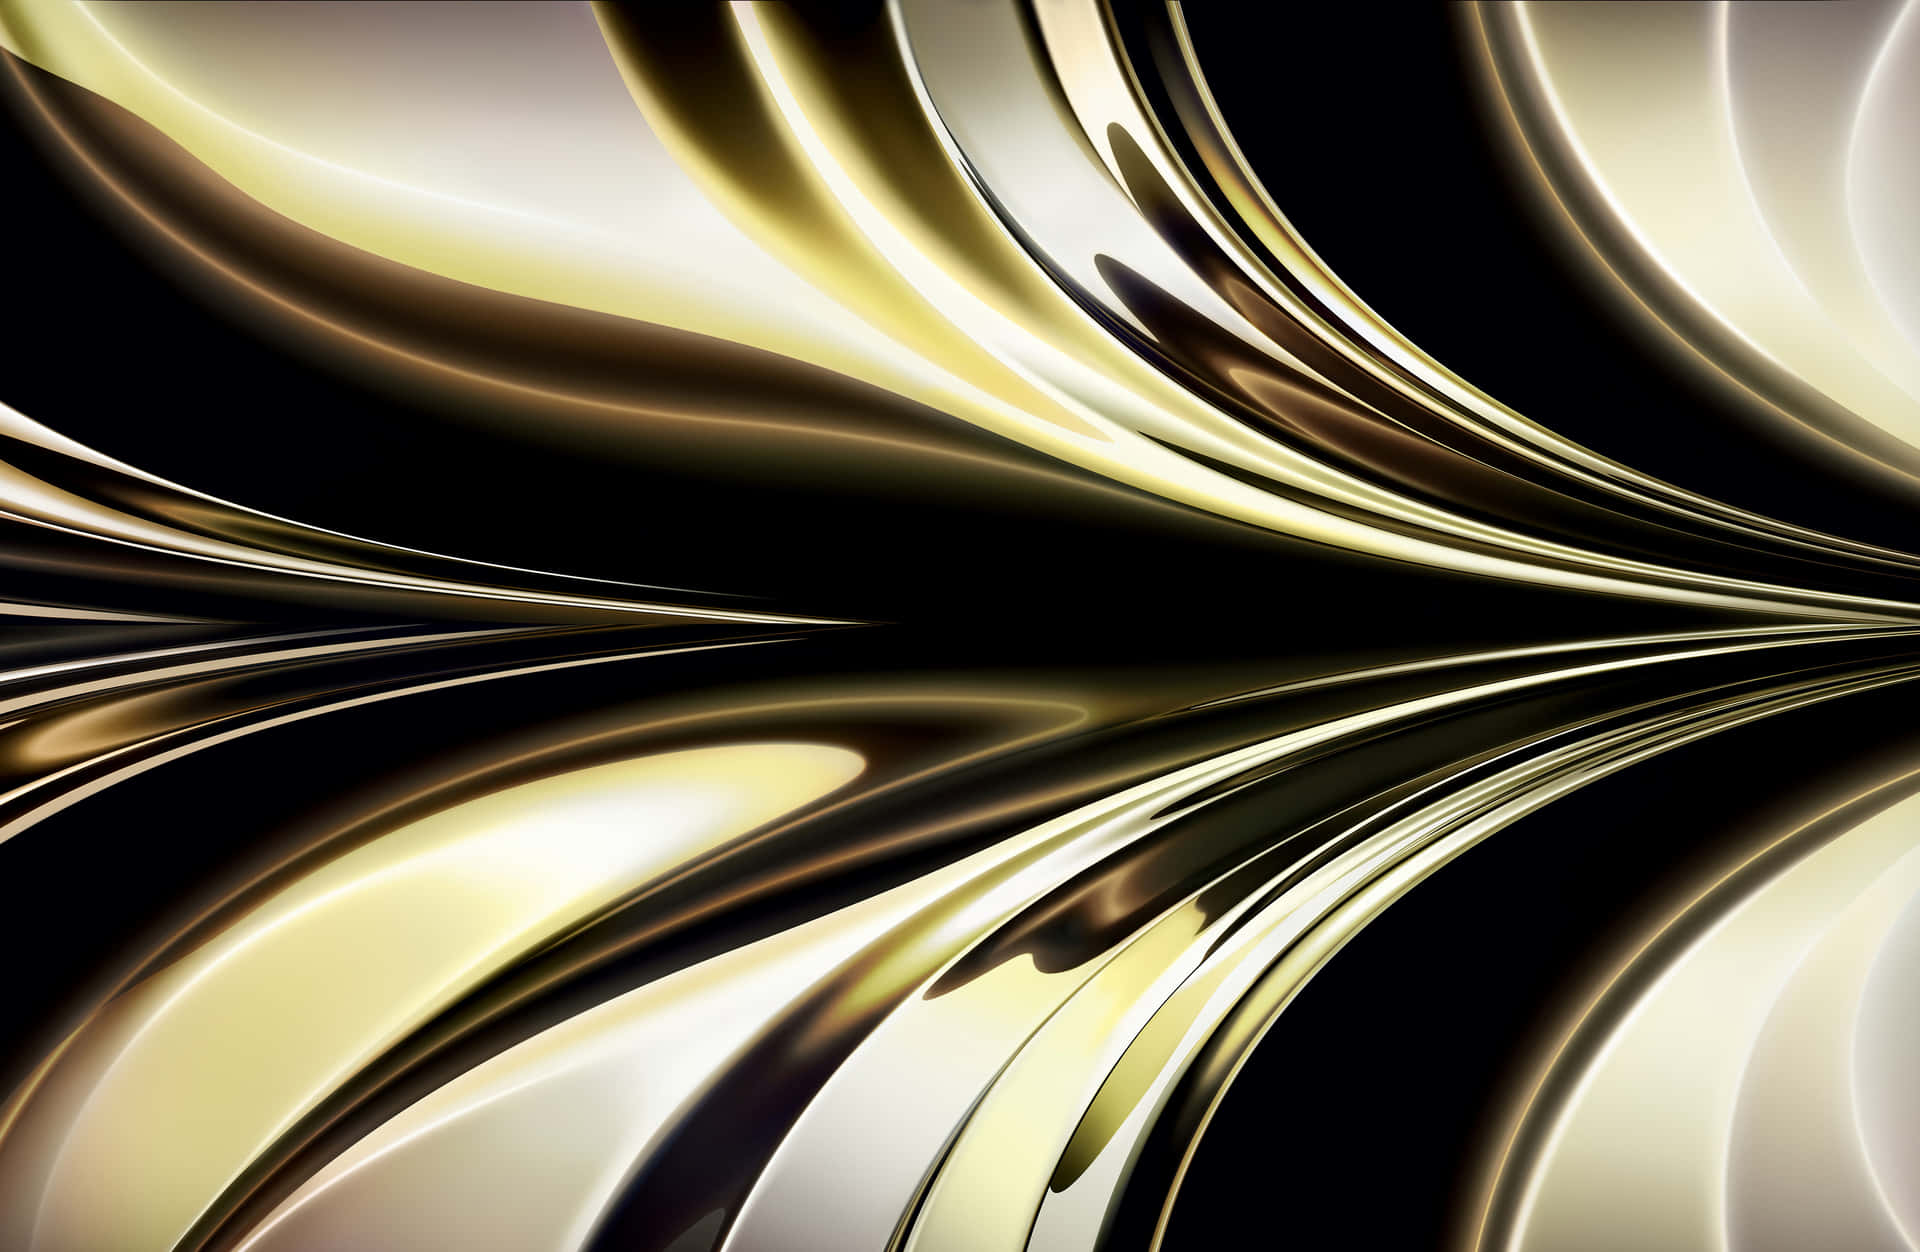 Abstract Golden Swirls Background Wallpaper